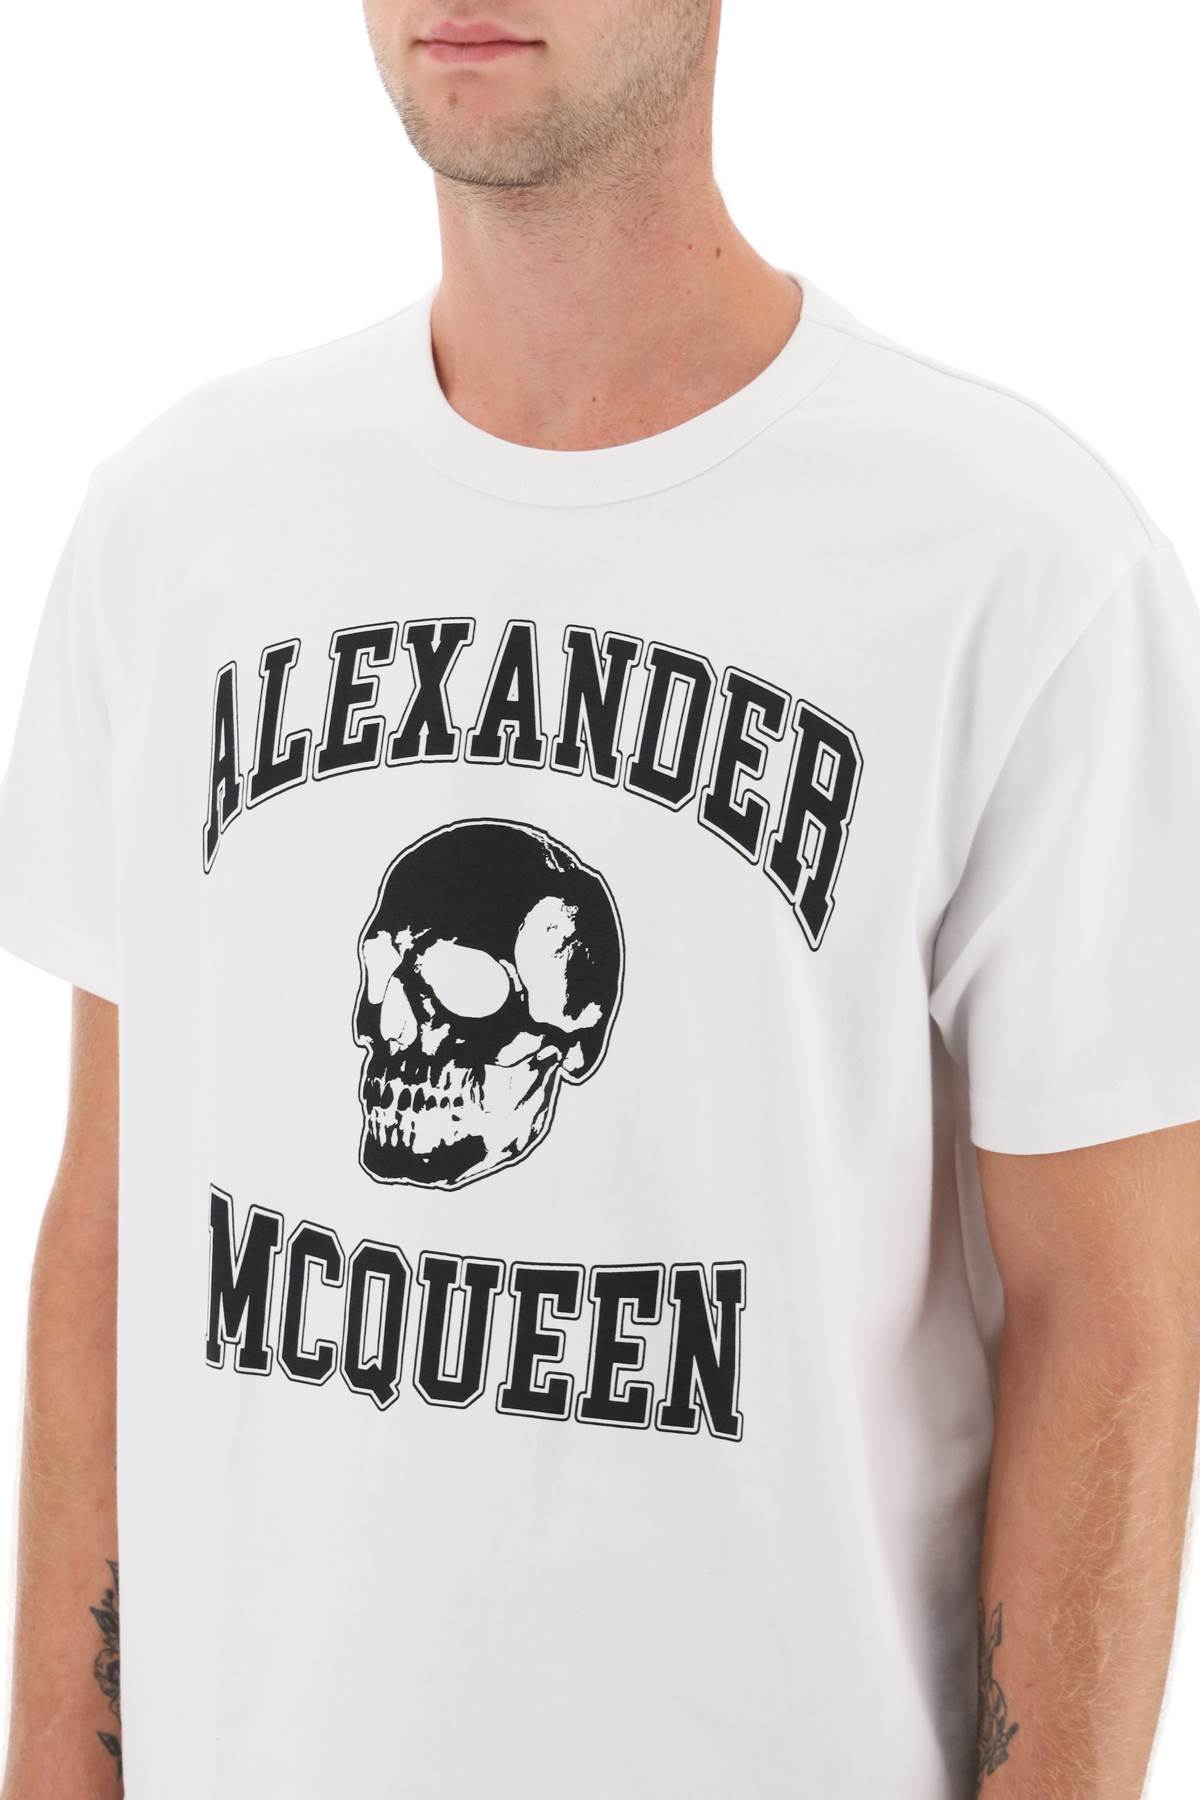 Alexander mcqueen t-shirt with varsity logo and skull print-3